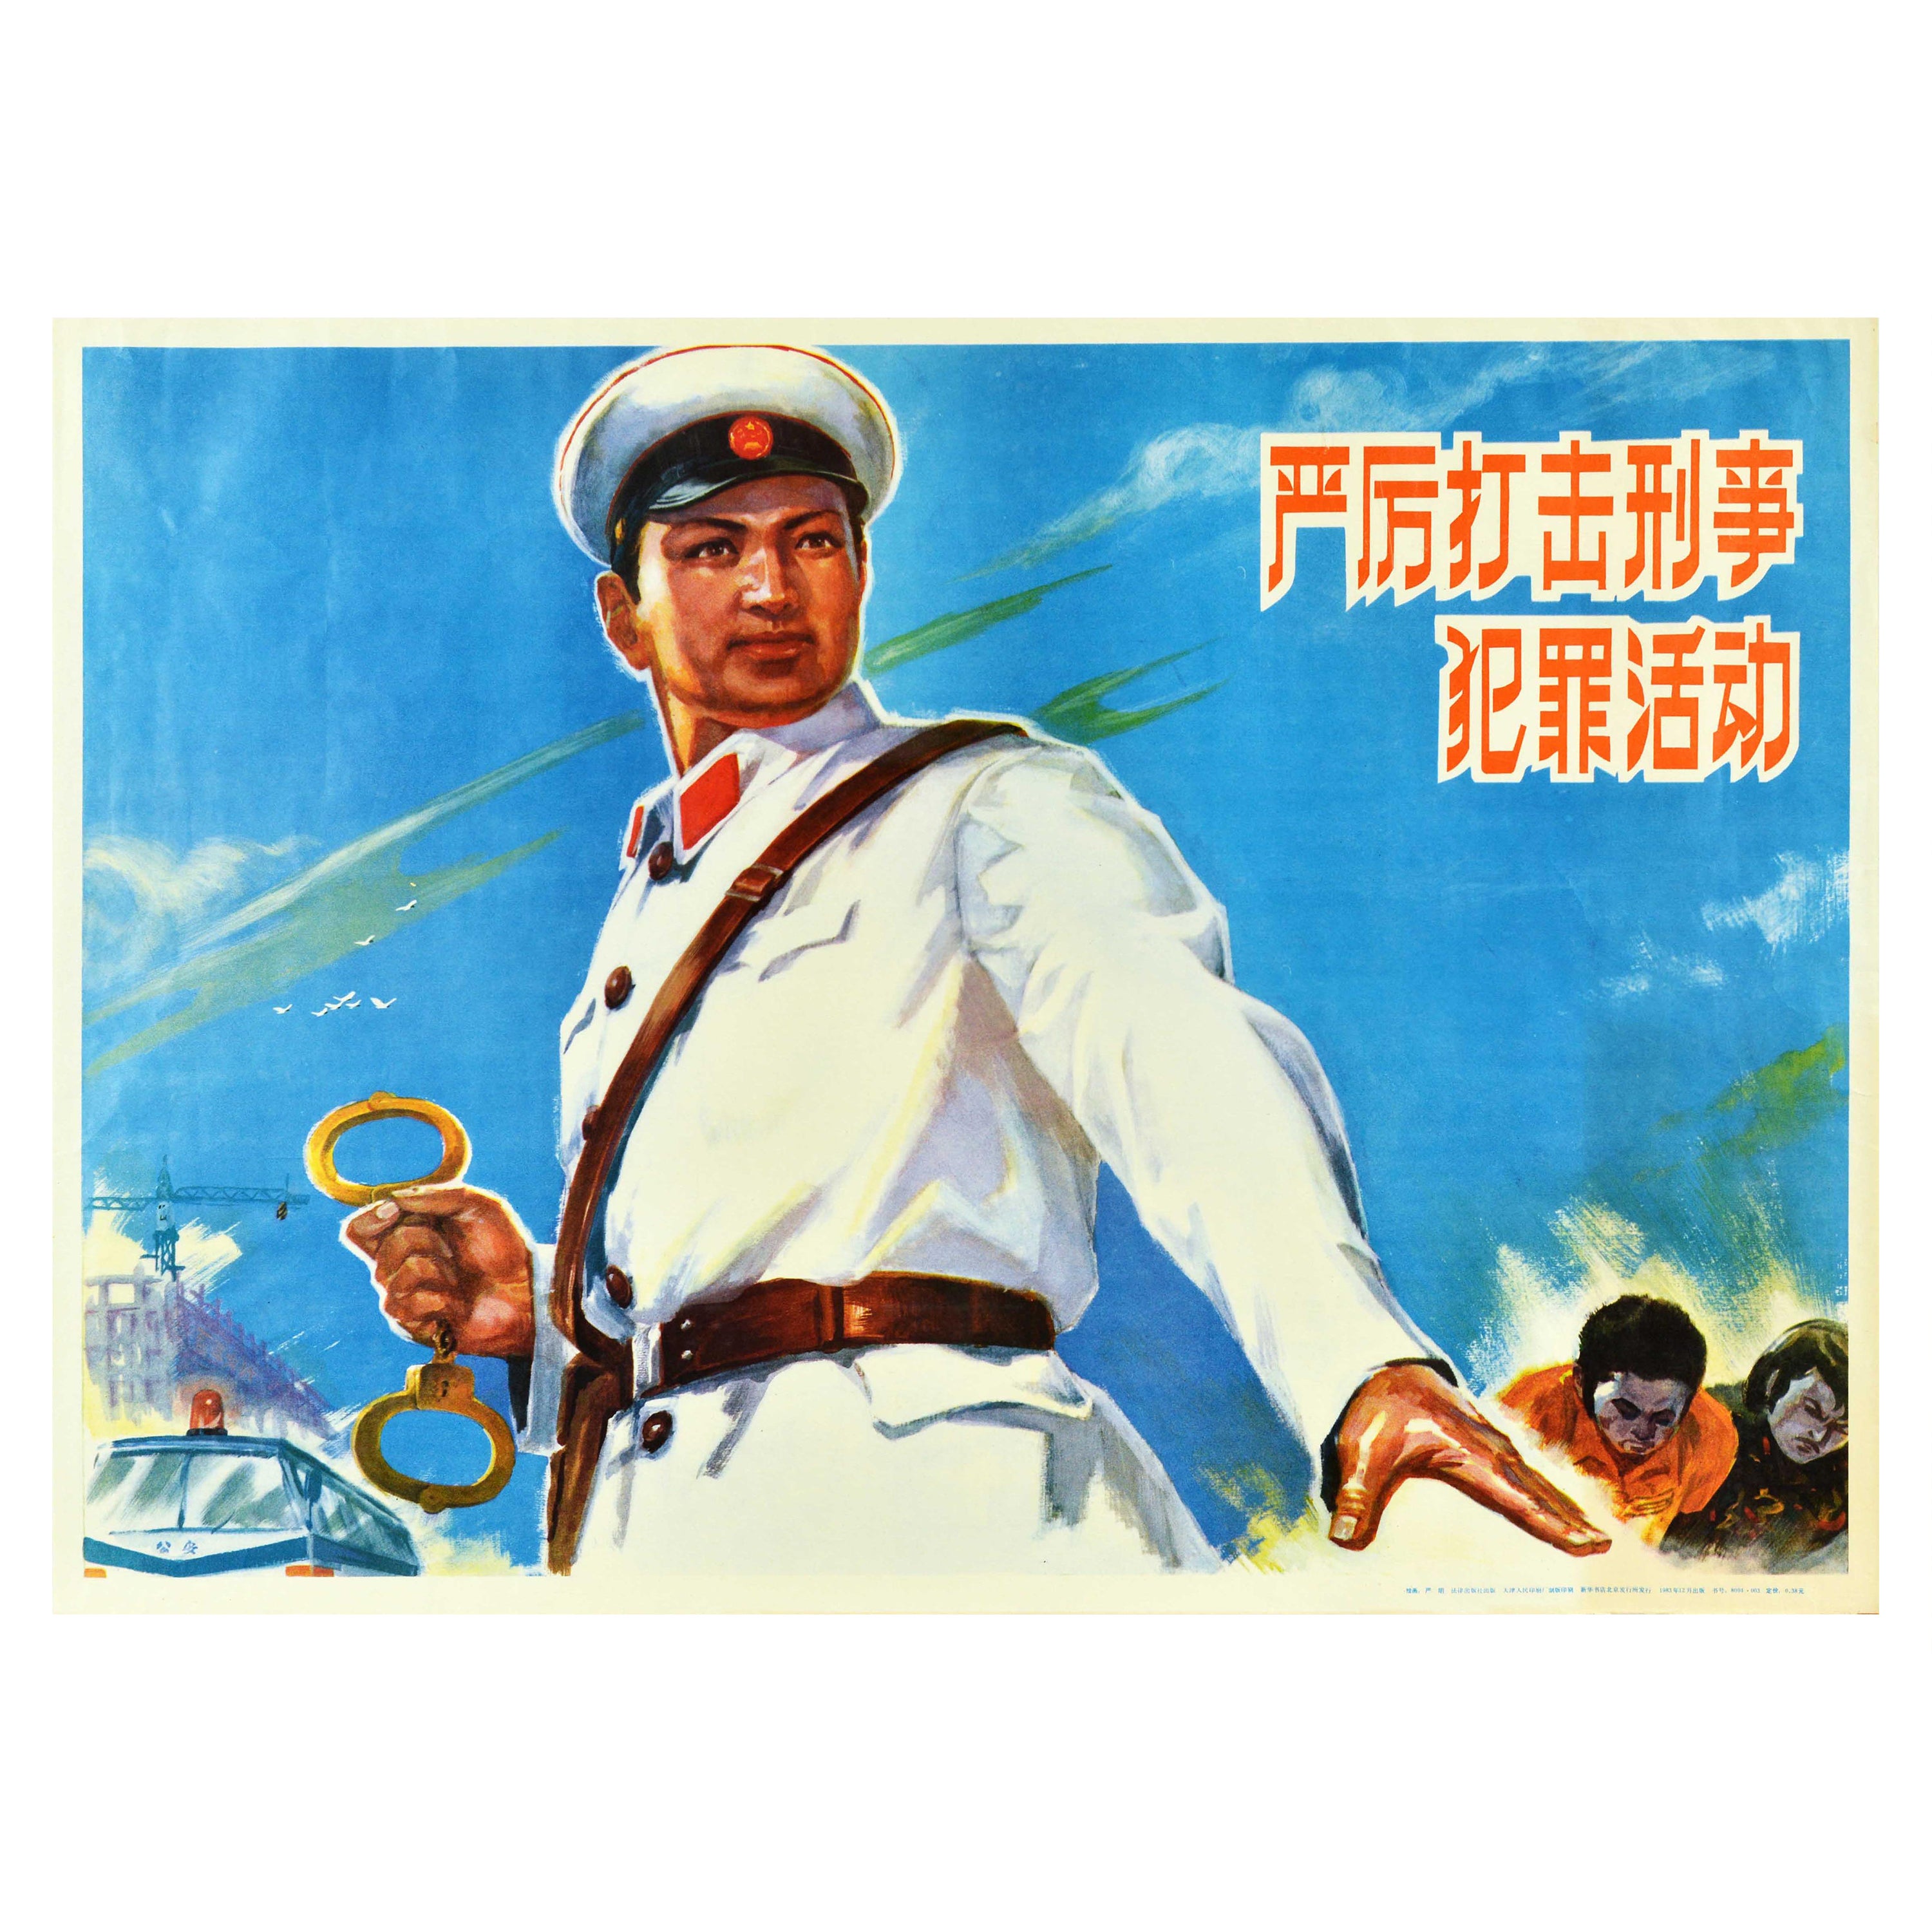 Original Vintage Propaganda Poster Criminal Activity Crackdown Law Police China